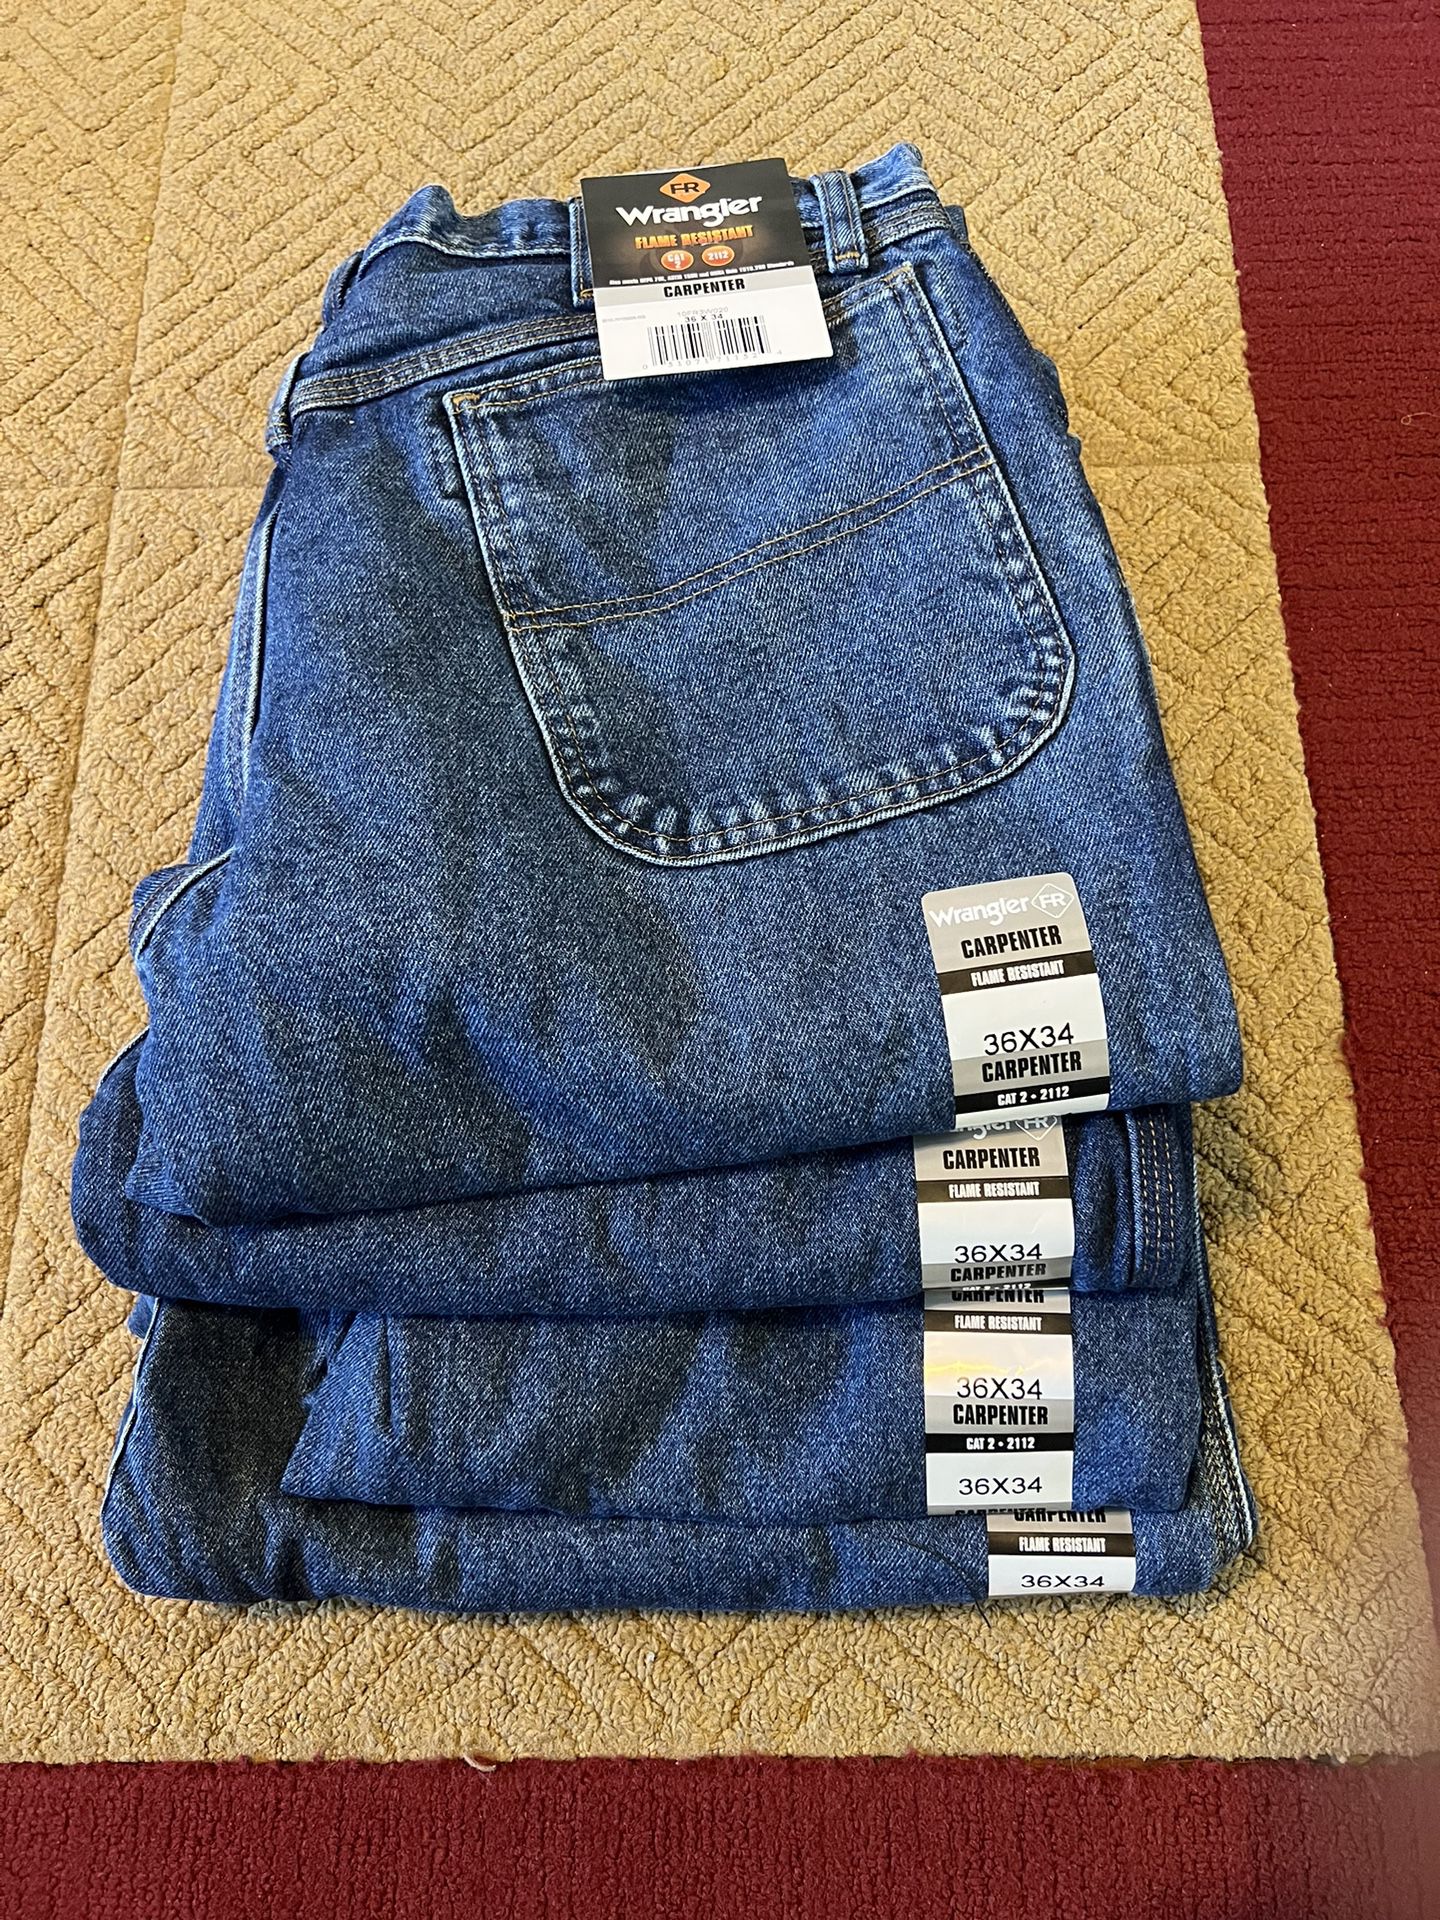 udbrud etage har en finger i kagen Wrangler fire Resistant Jeans new for Sale in Grand Prairie, TX - OfferUp